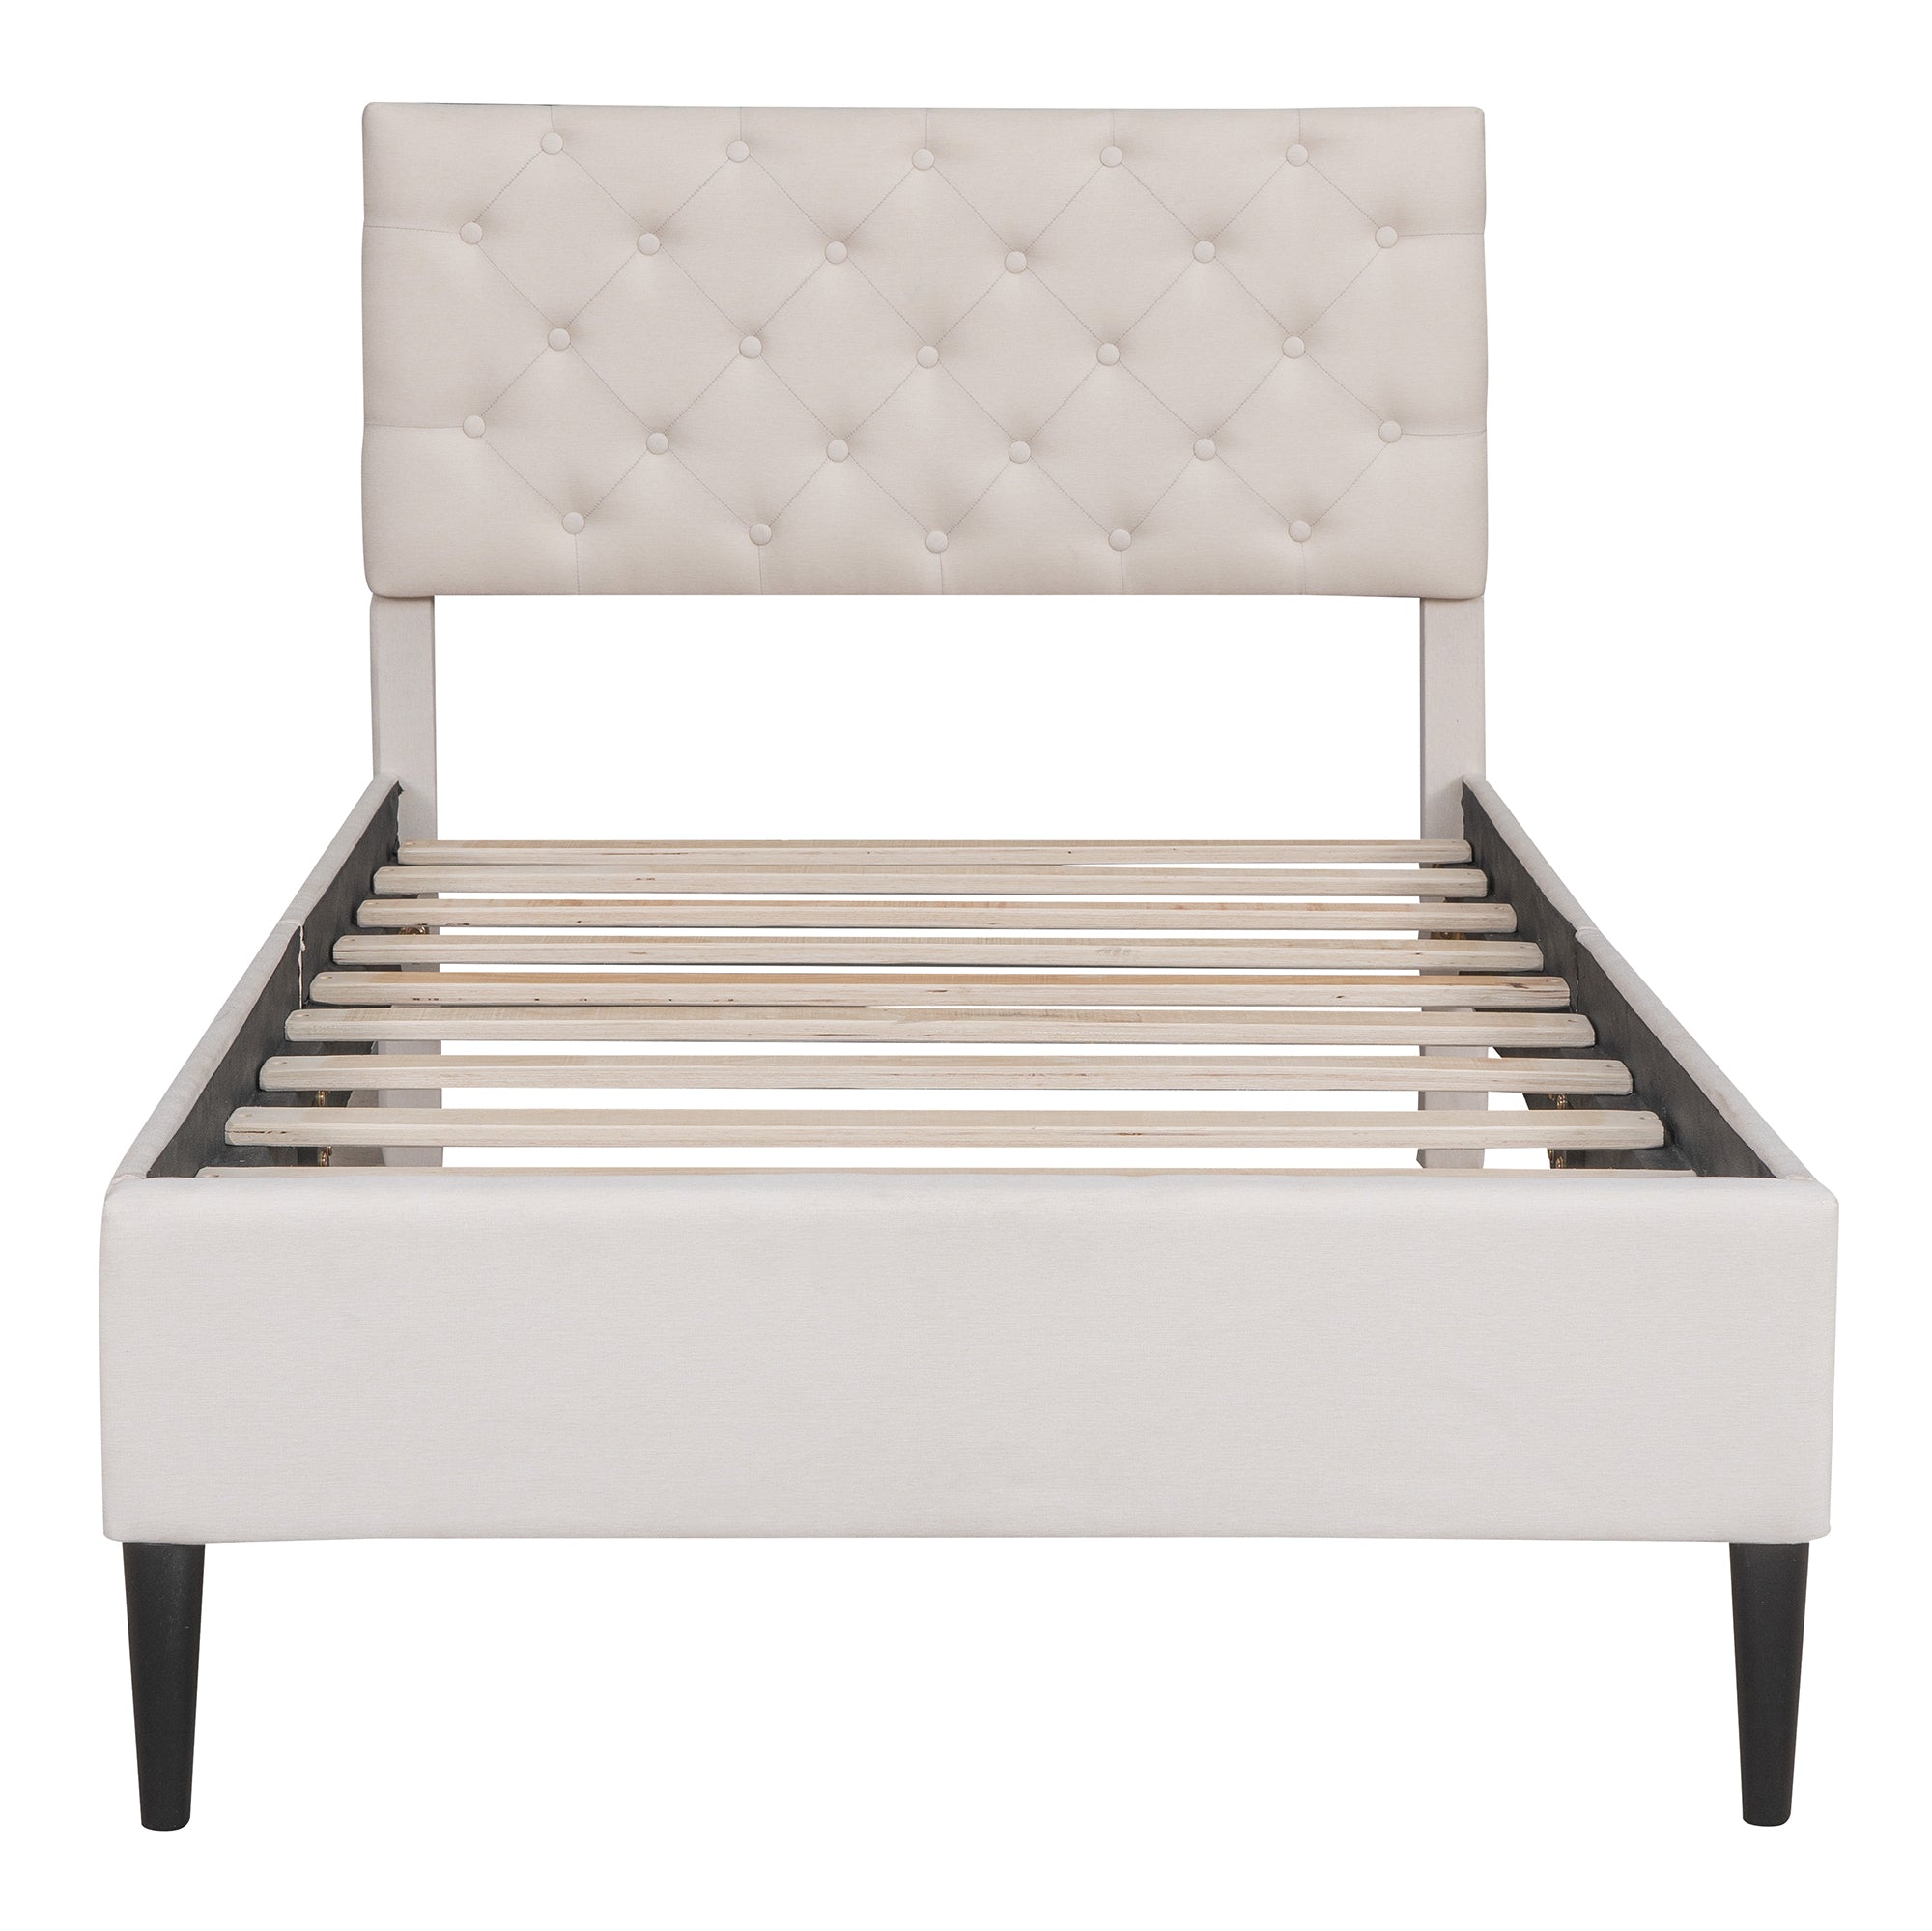 Upholstered Linen Platform Bed, Twin Size, Beige twin-beige-linen